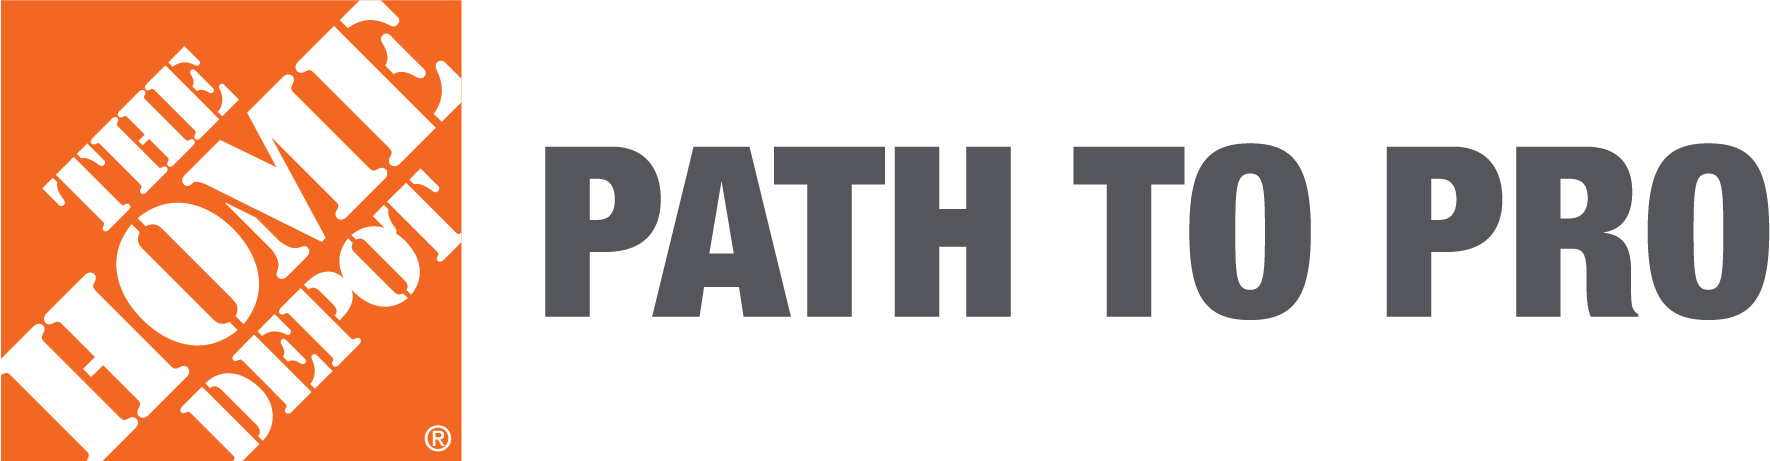 Home Depot Path to Pro Program logo